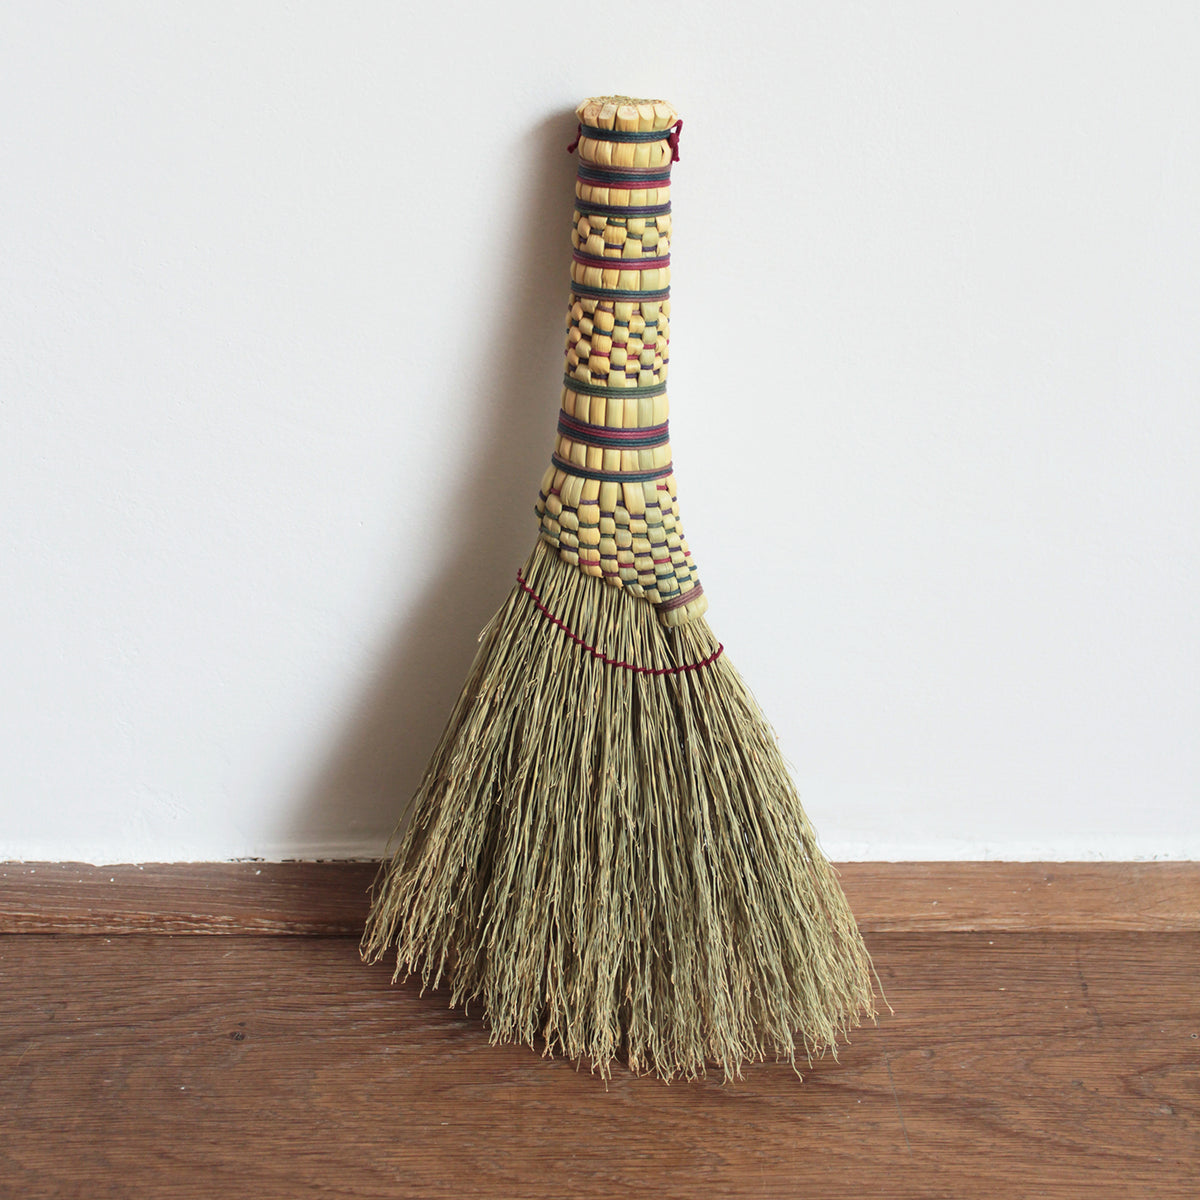 Wooden street broom 30 cm - YORK